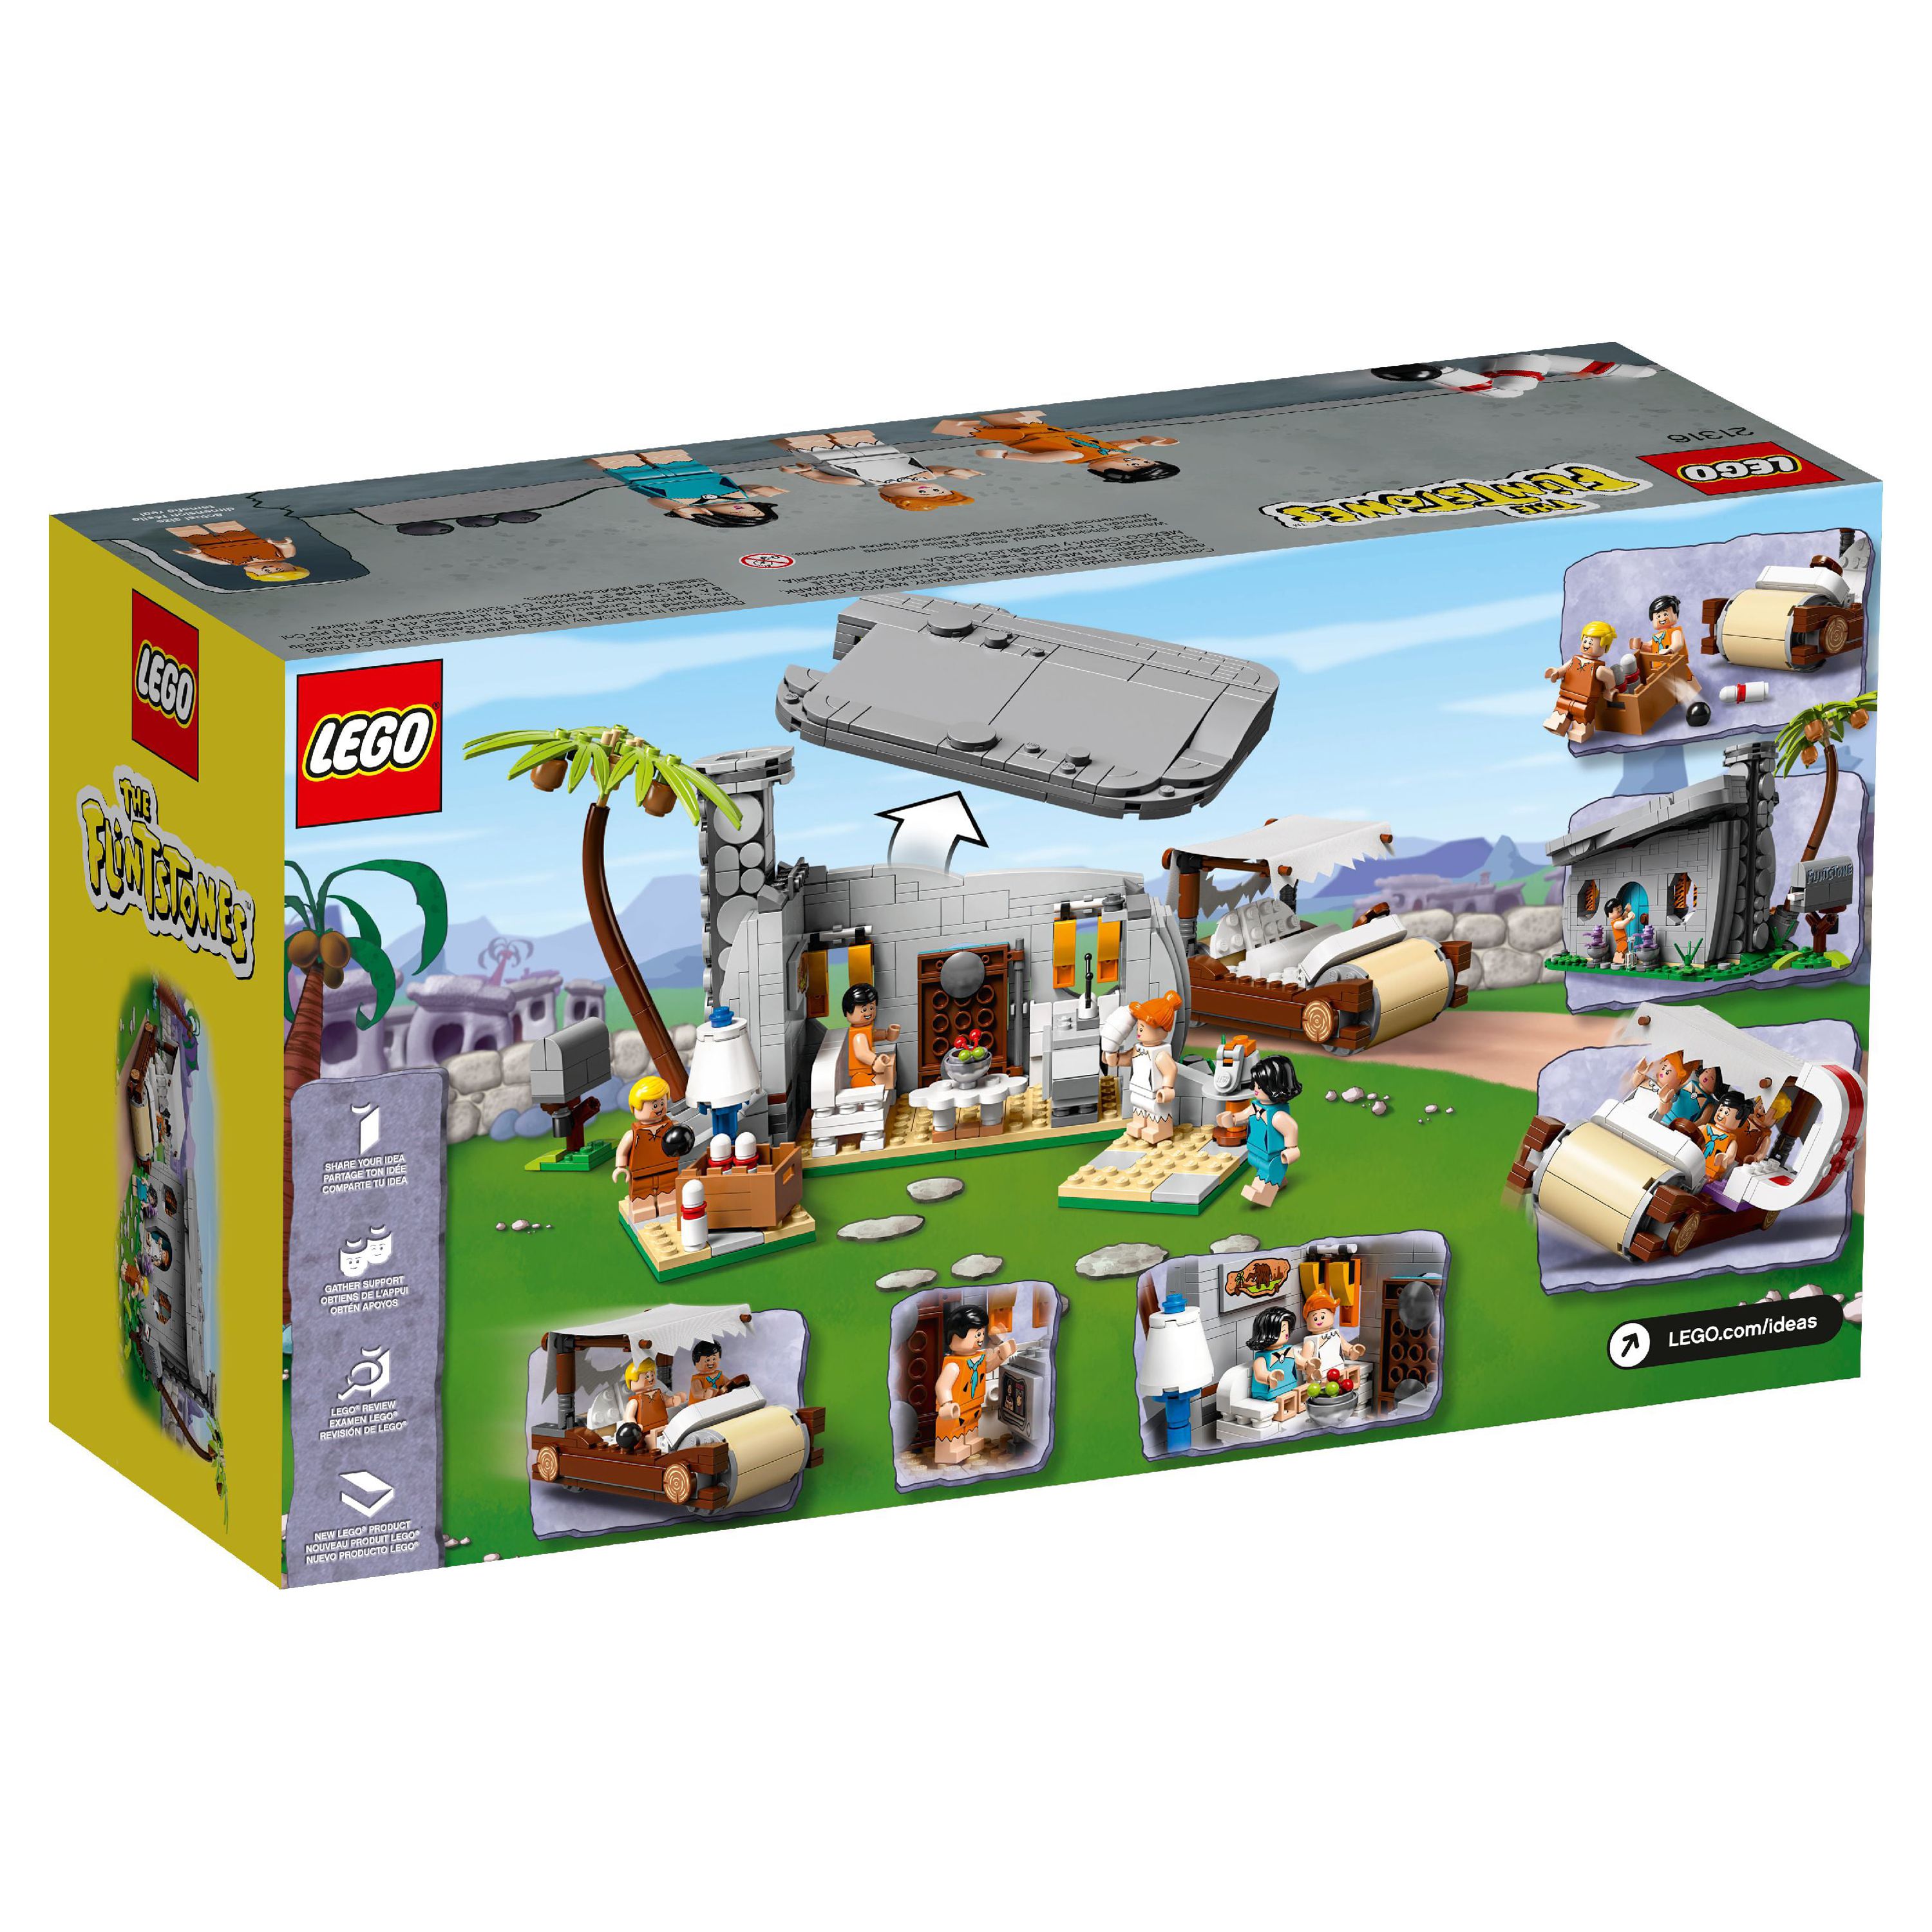 LEGO Ideas The Flintstones House Building Set 21316 - image 5 of 7